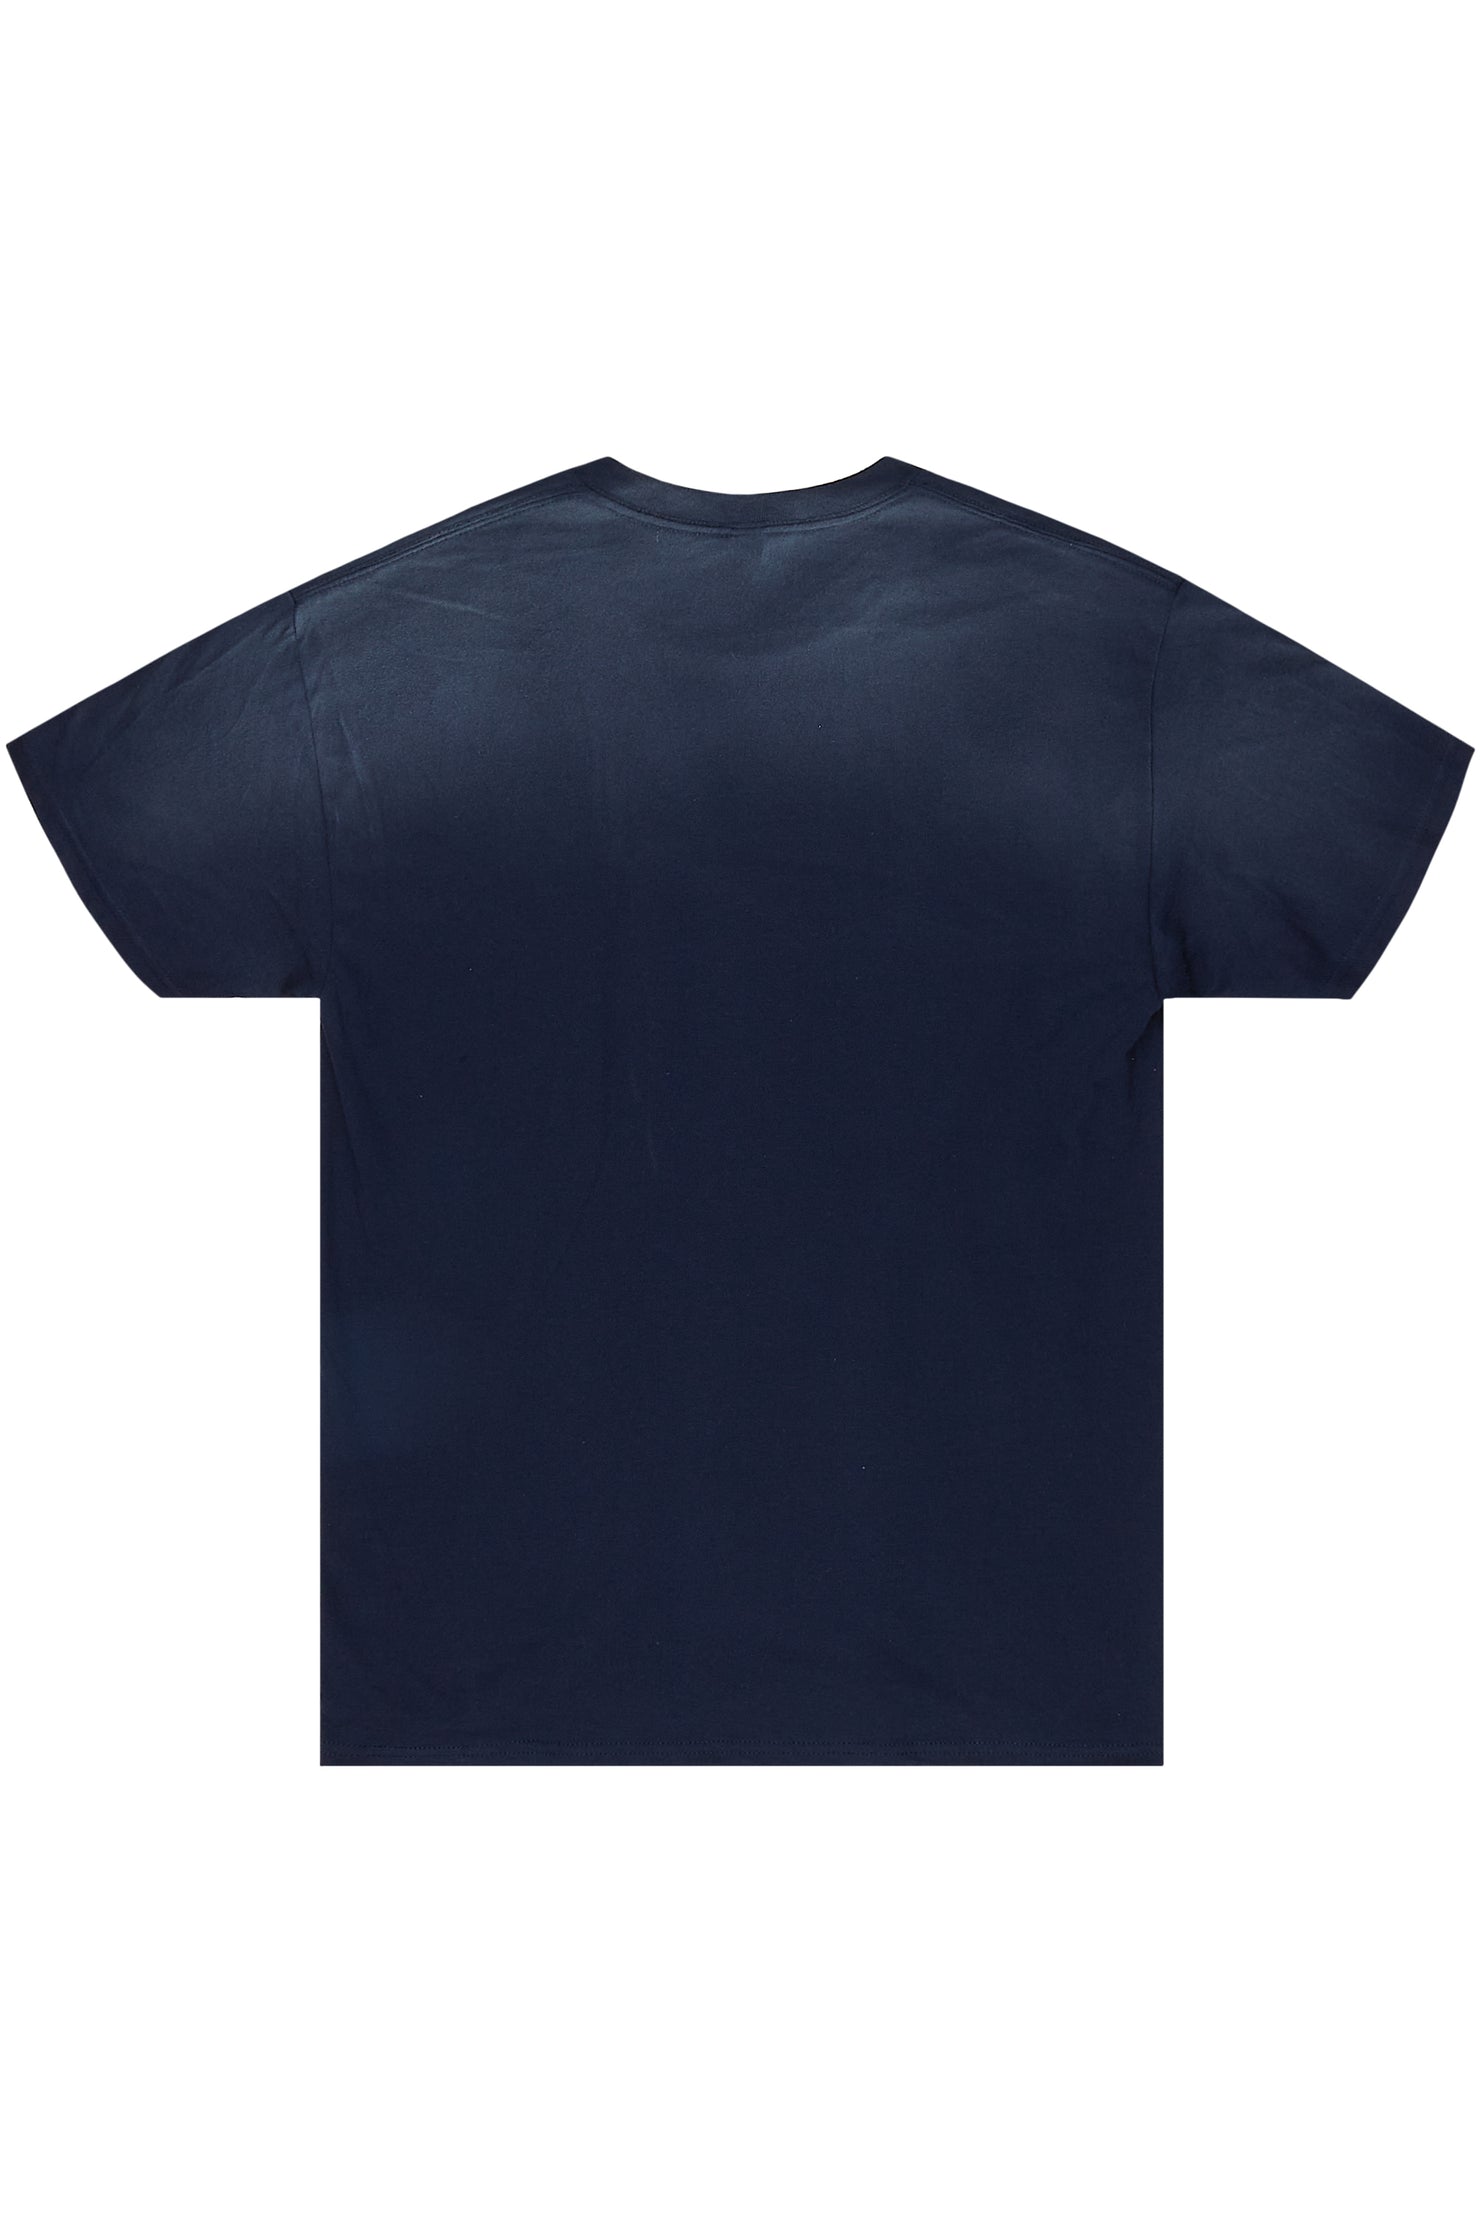 Palmer Navy Graphic T-Shirt